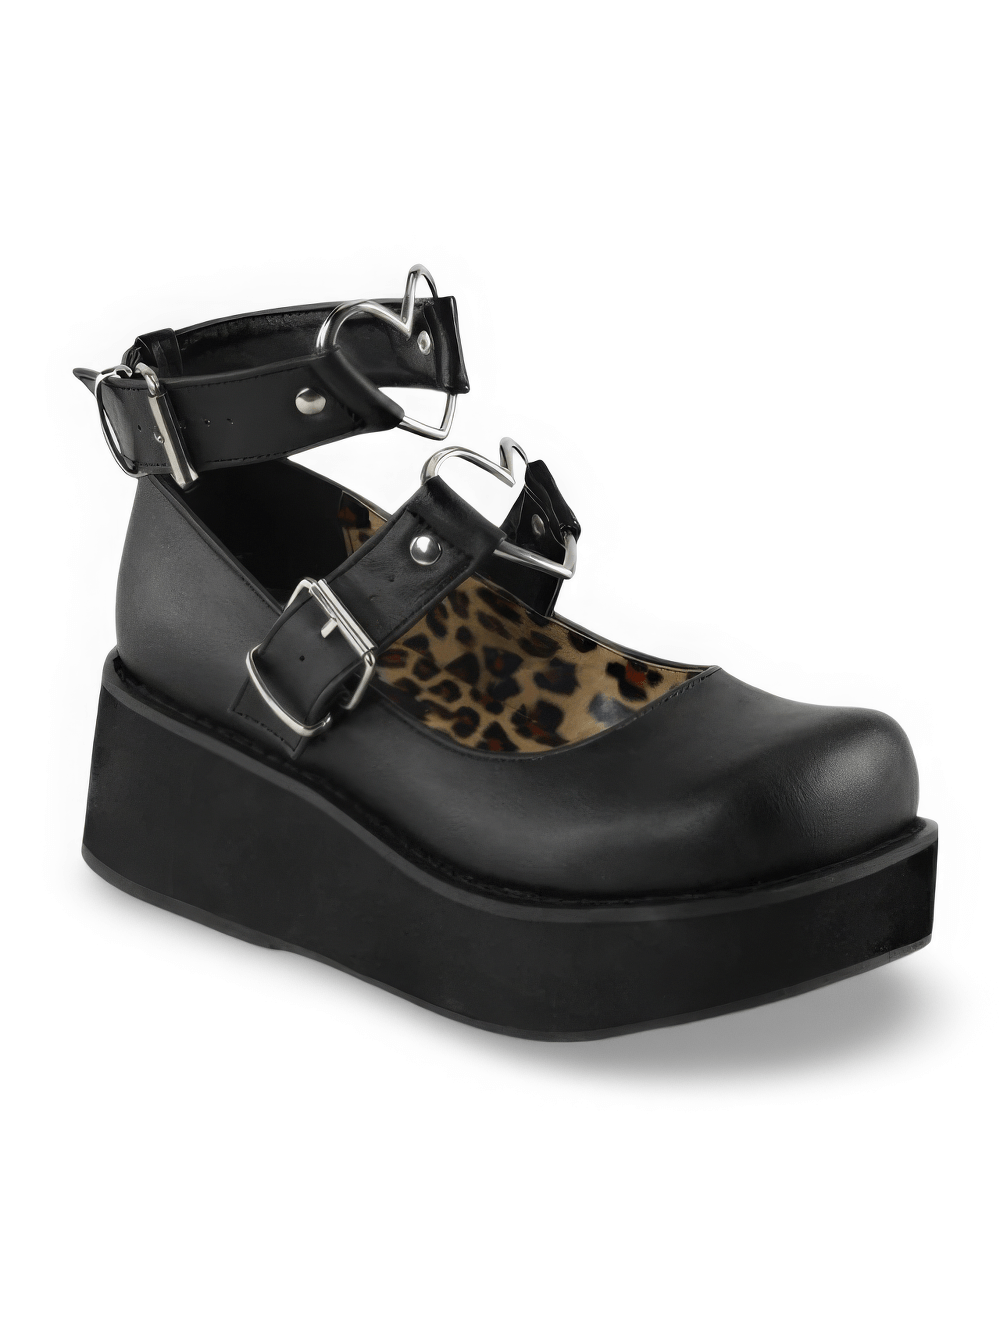 DEMONIA Black Platform Mary Jane Shoes with Heart O-Rings